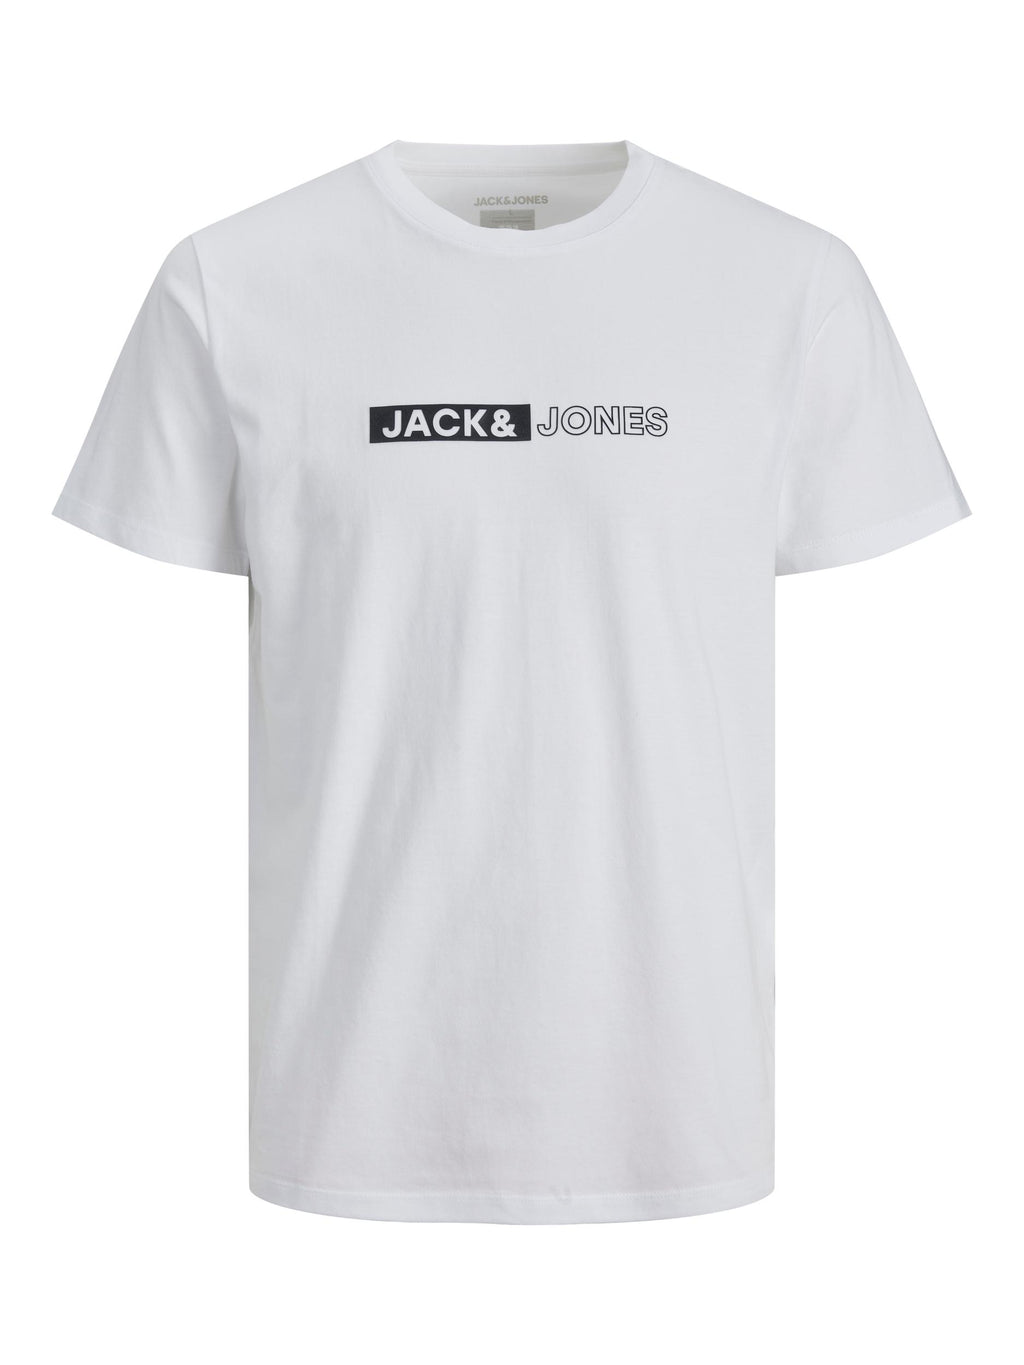 Jack & Jones Neo Tee White - Raw Menswear